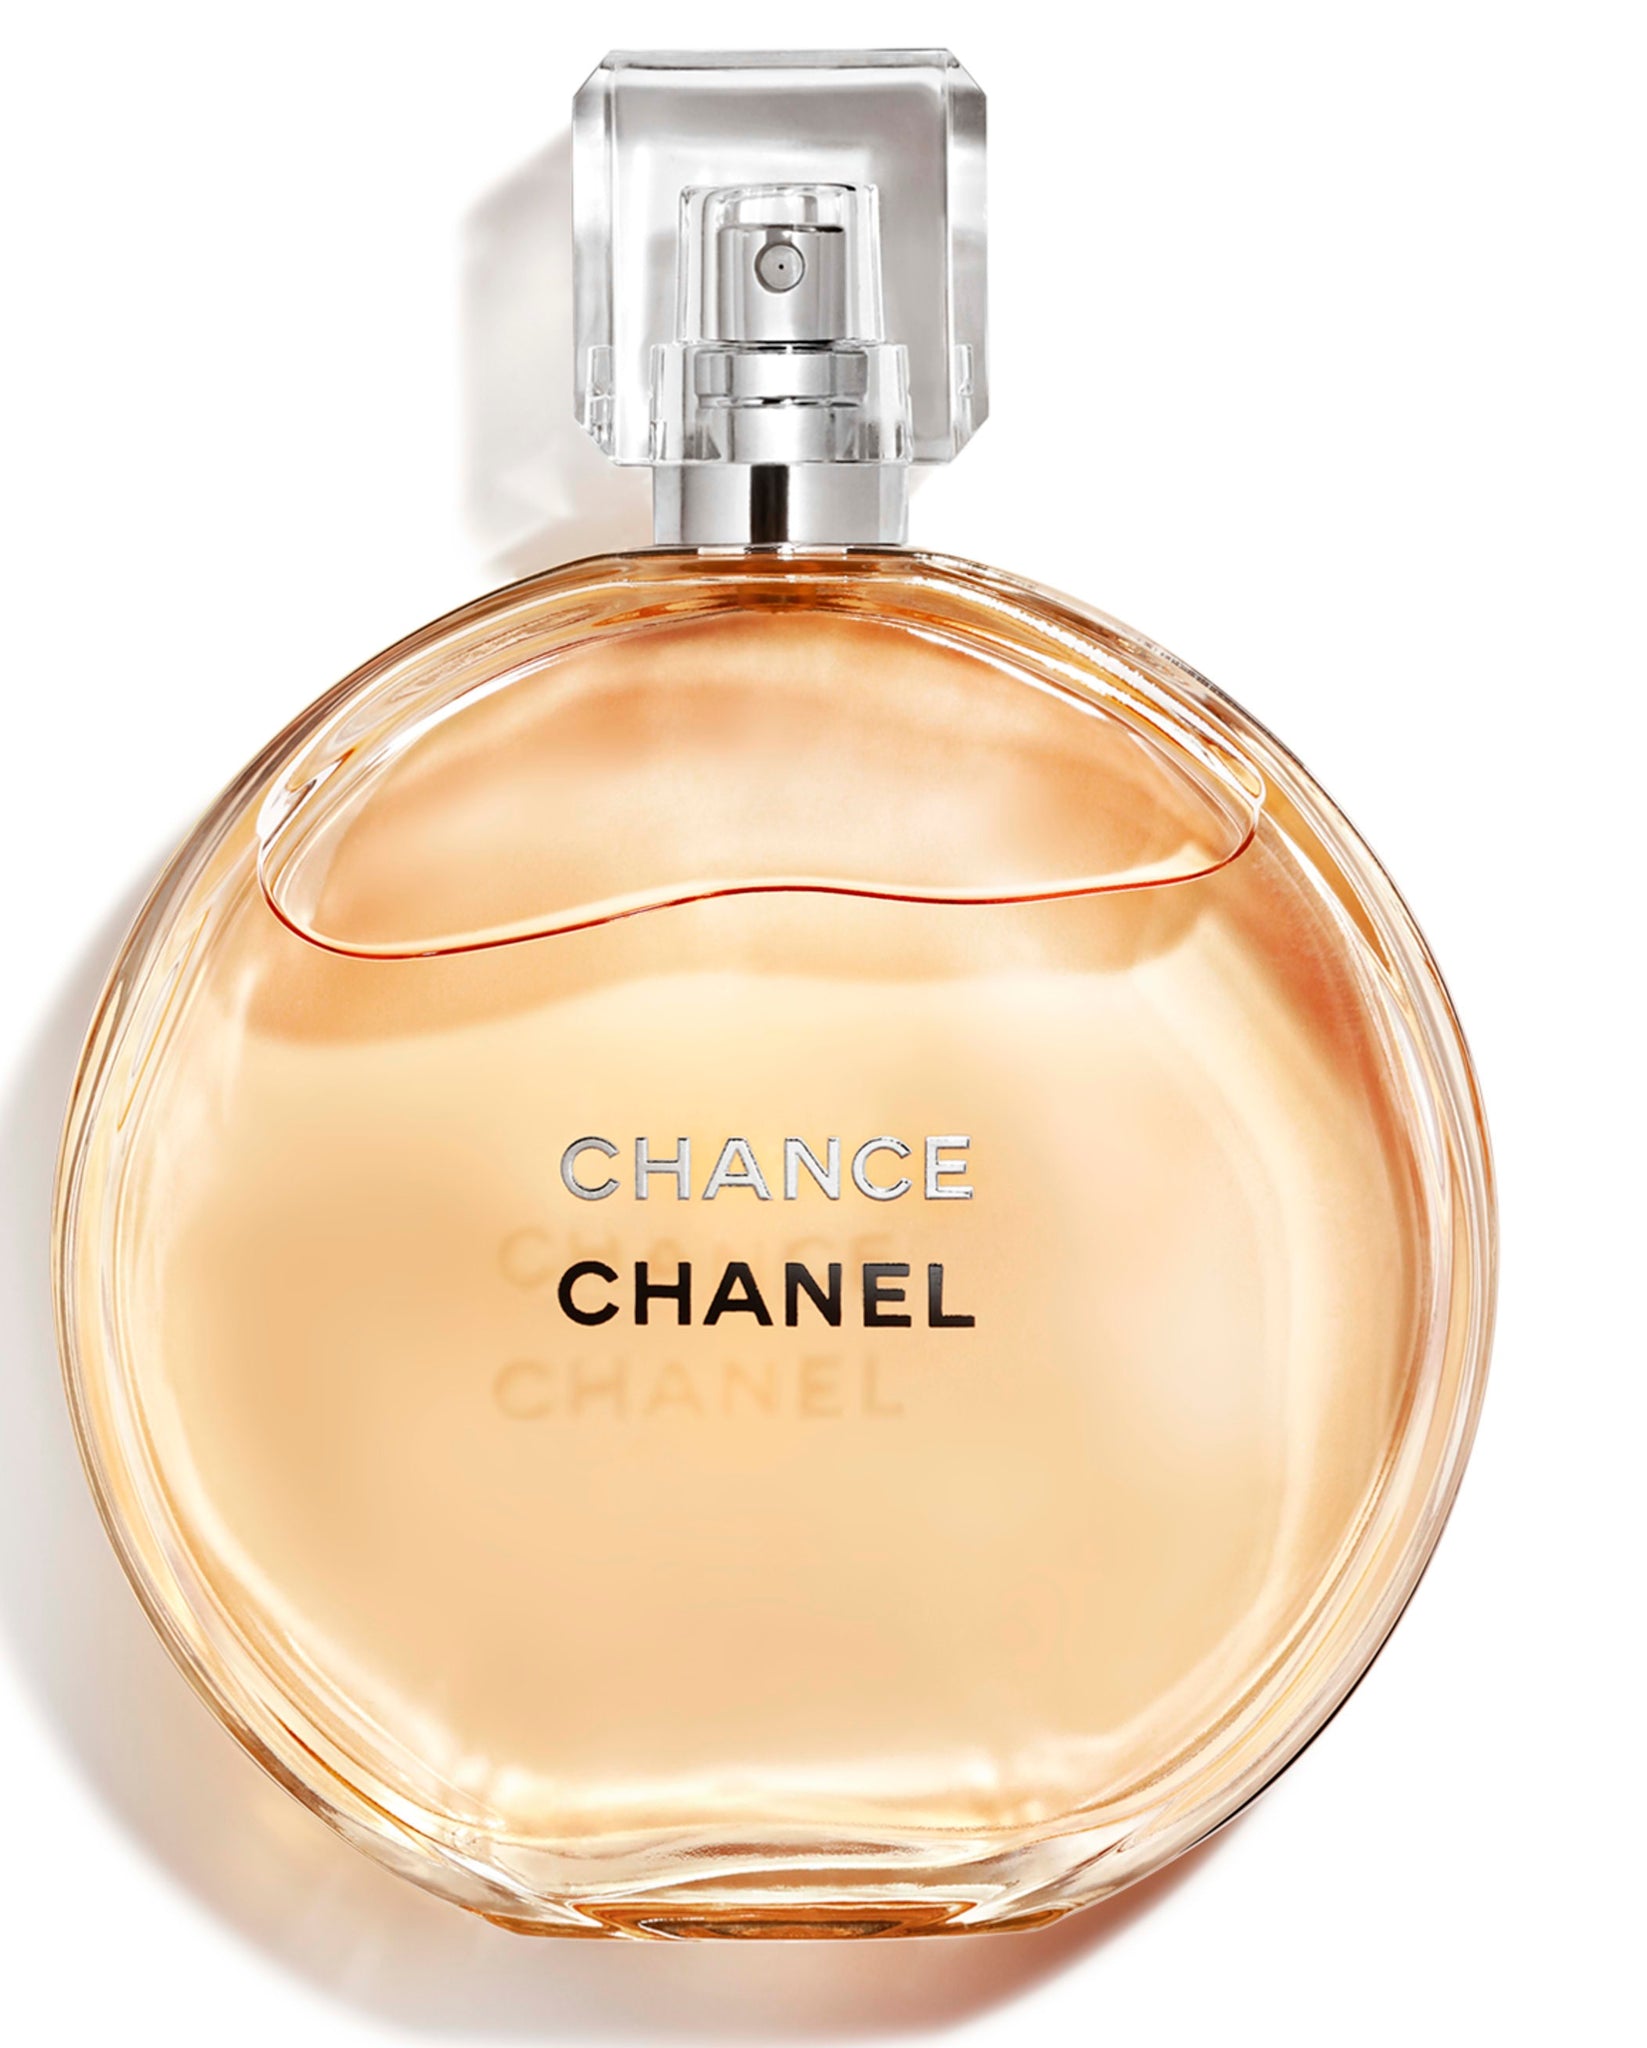 CHANCE EAU FRAÎCHE Chanel · precio - Perfumes Club